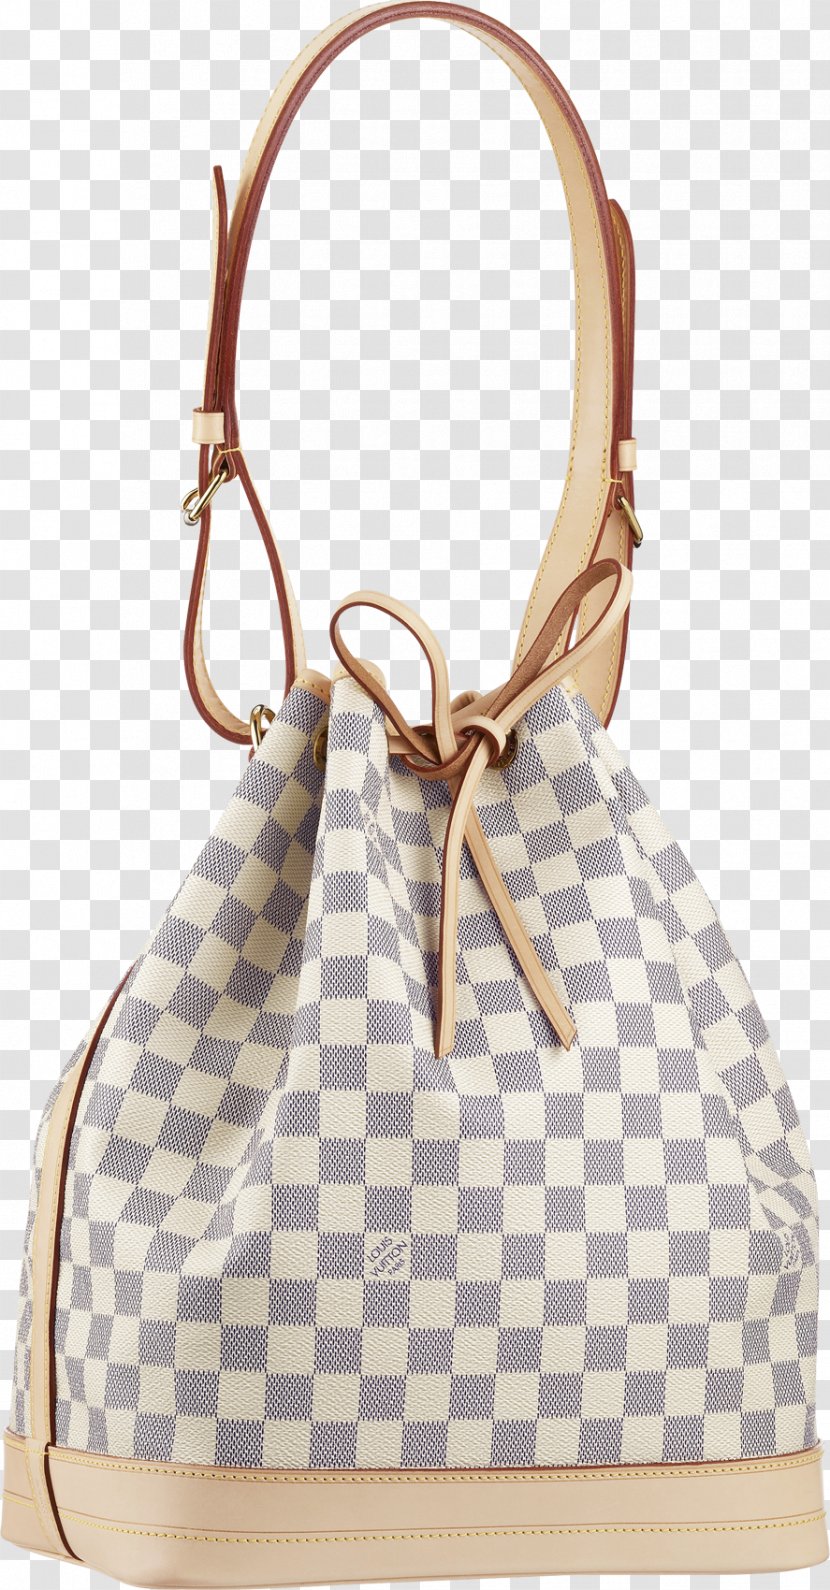 Chanel Louis Vuitton Handbag ダミエ - Bag Transparent PNG